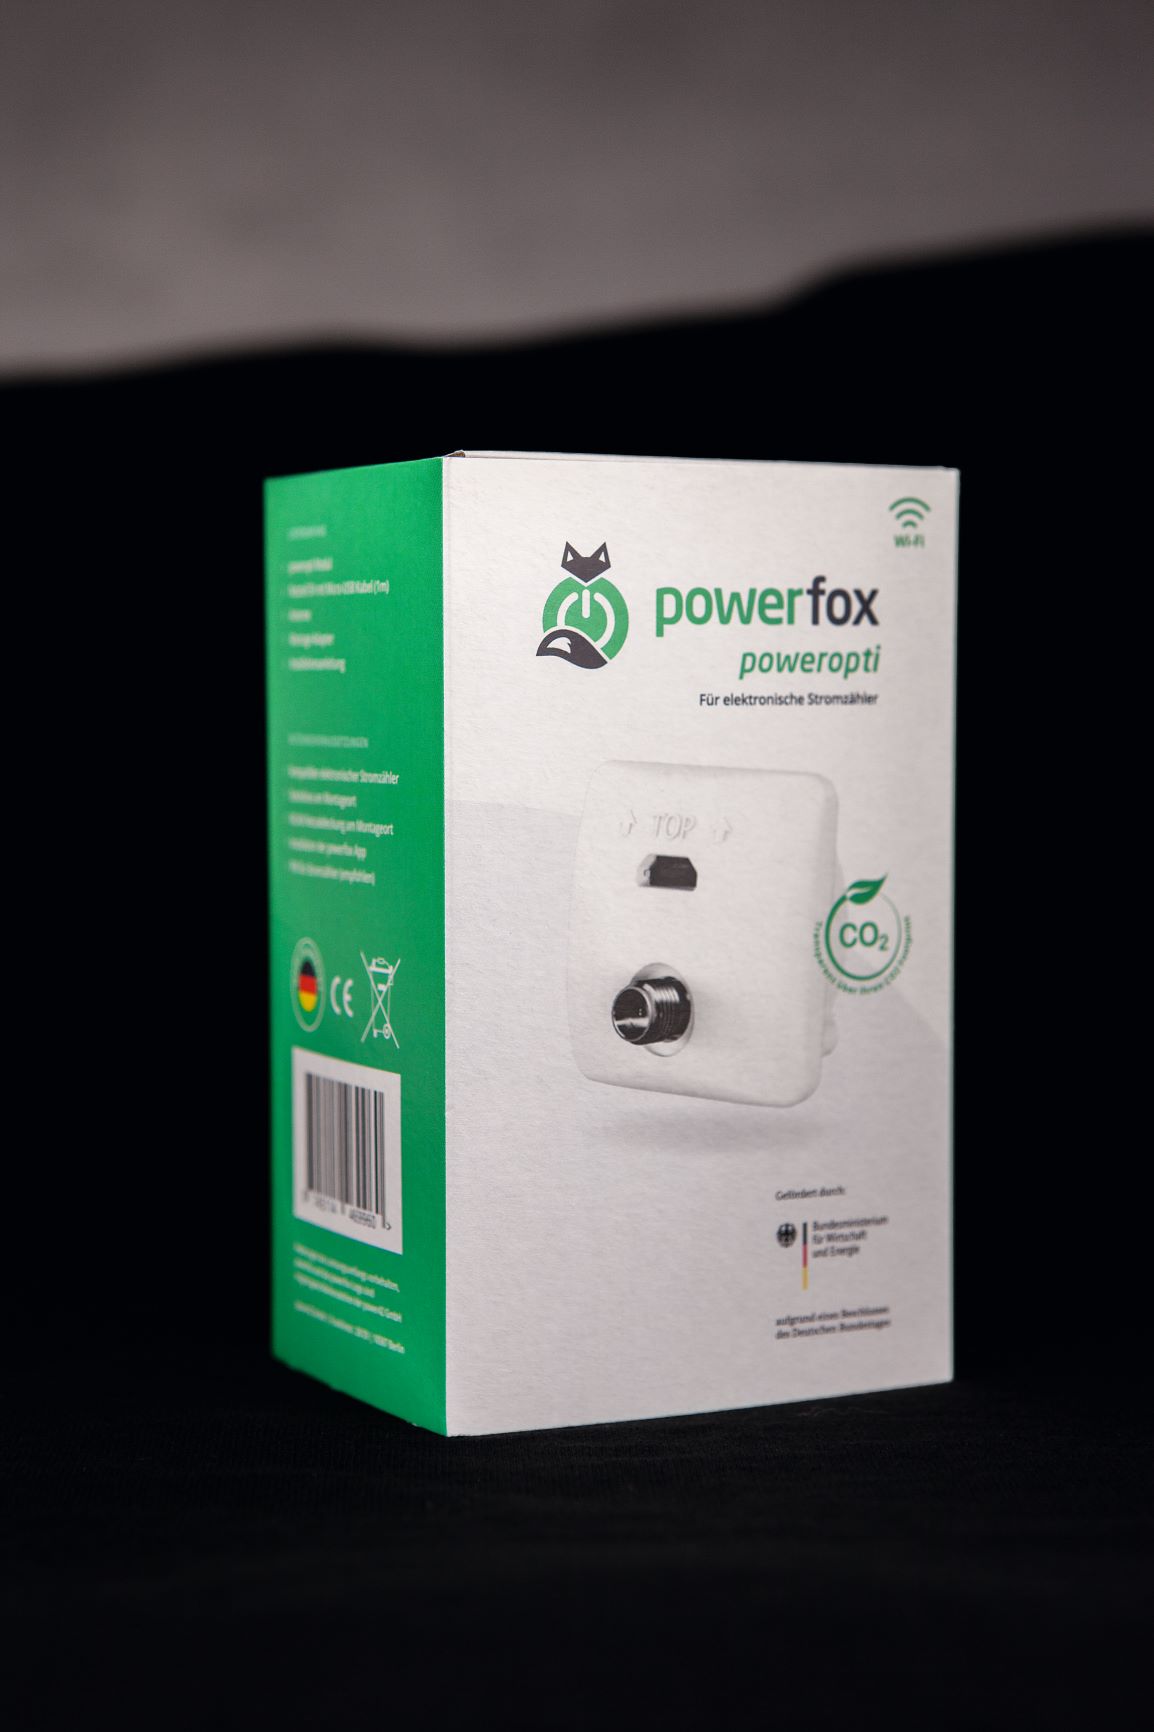 powerfox home - Apps on Google Play